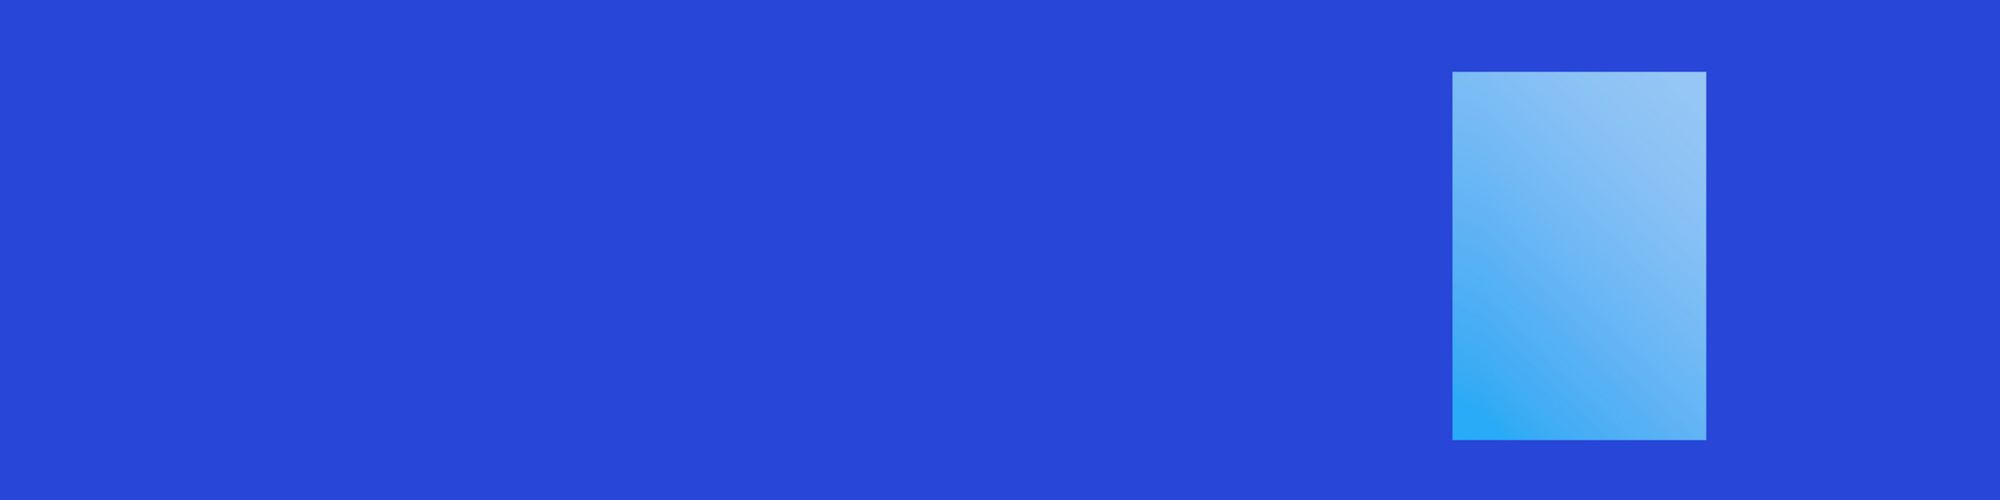 Kpmg frame window light blue on cobalt gradients